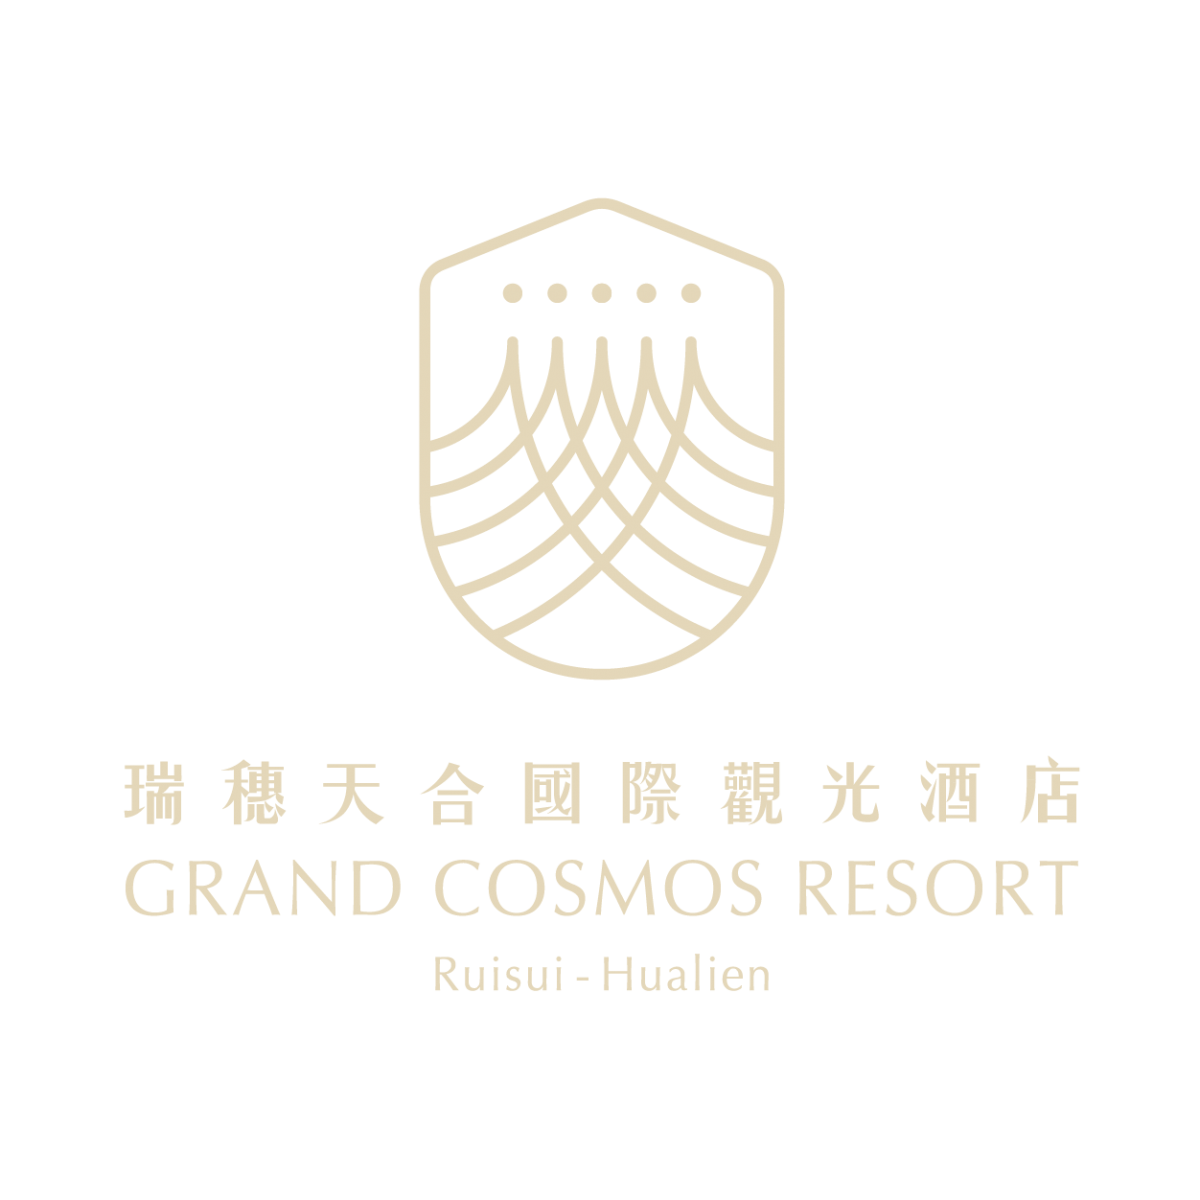 Grand Cosmos Resort Ruisui, Hualien 瑞穗天合國際觀光酒店